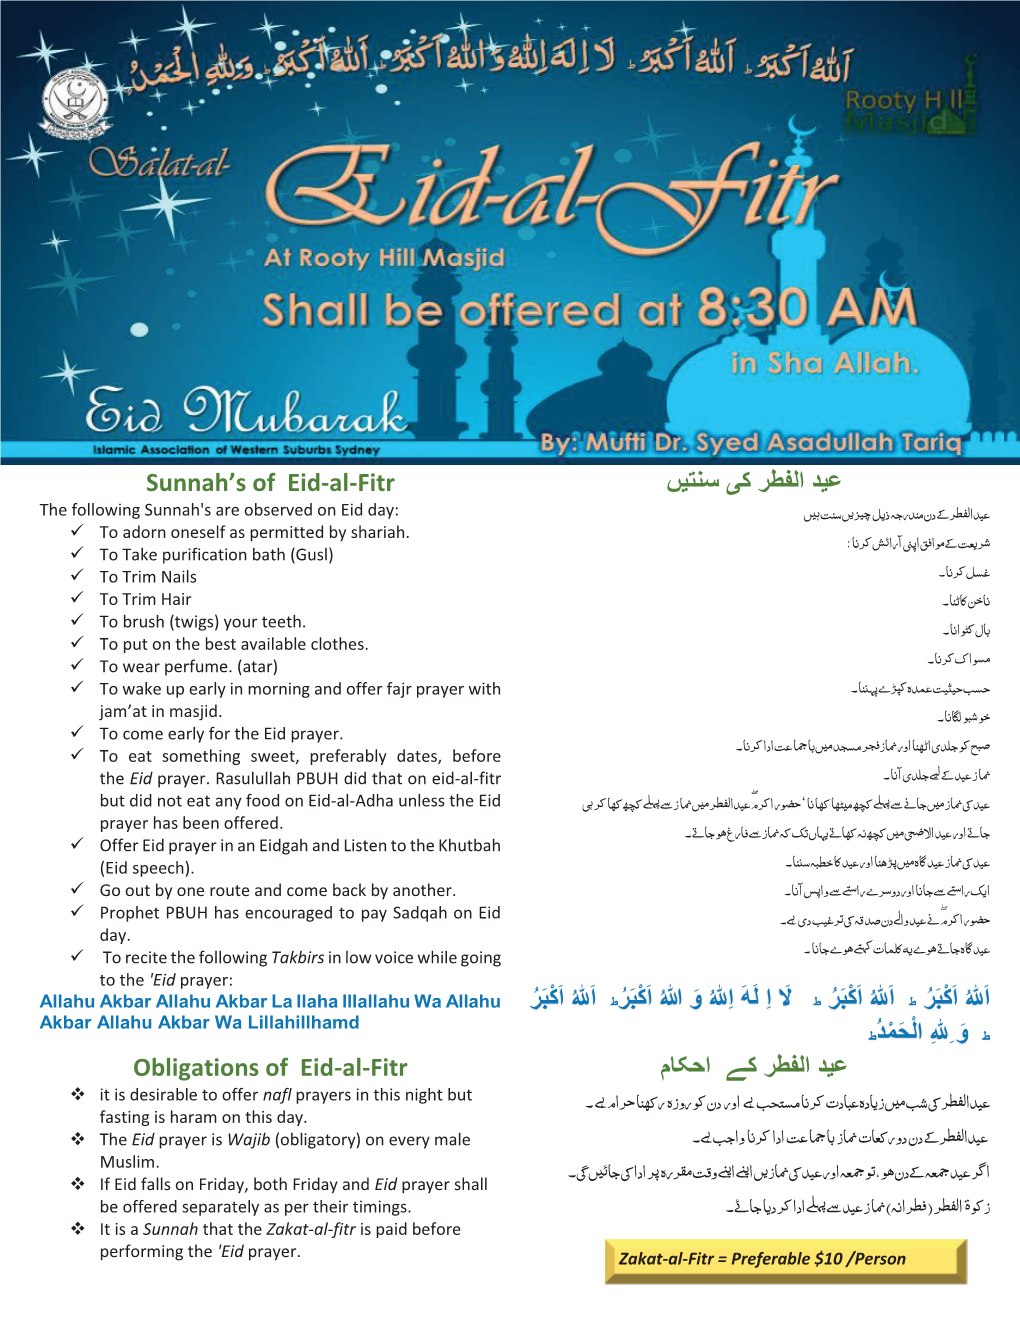 Sunnah's of Eid-Al-Fitr